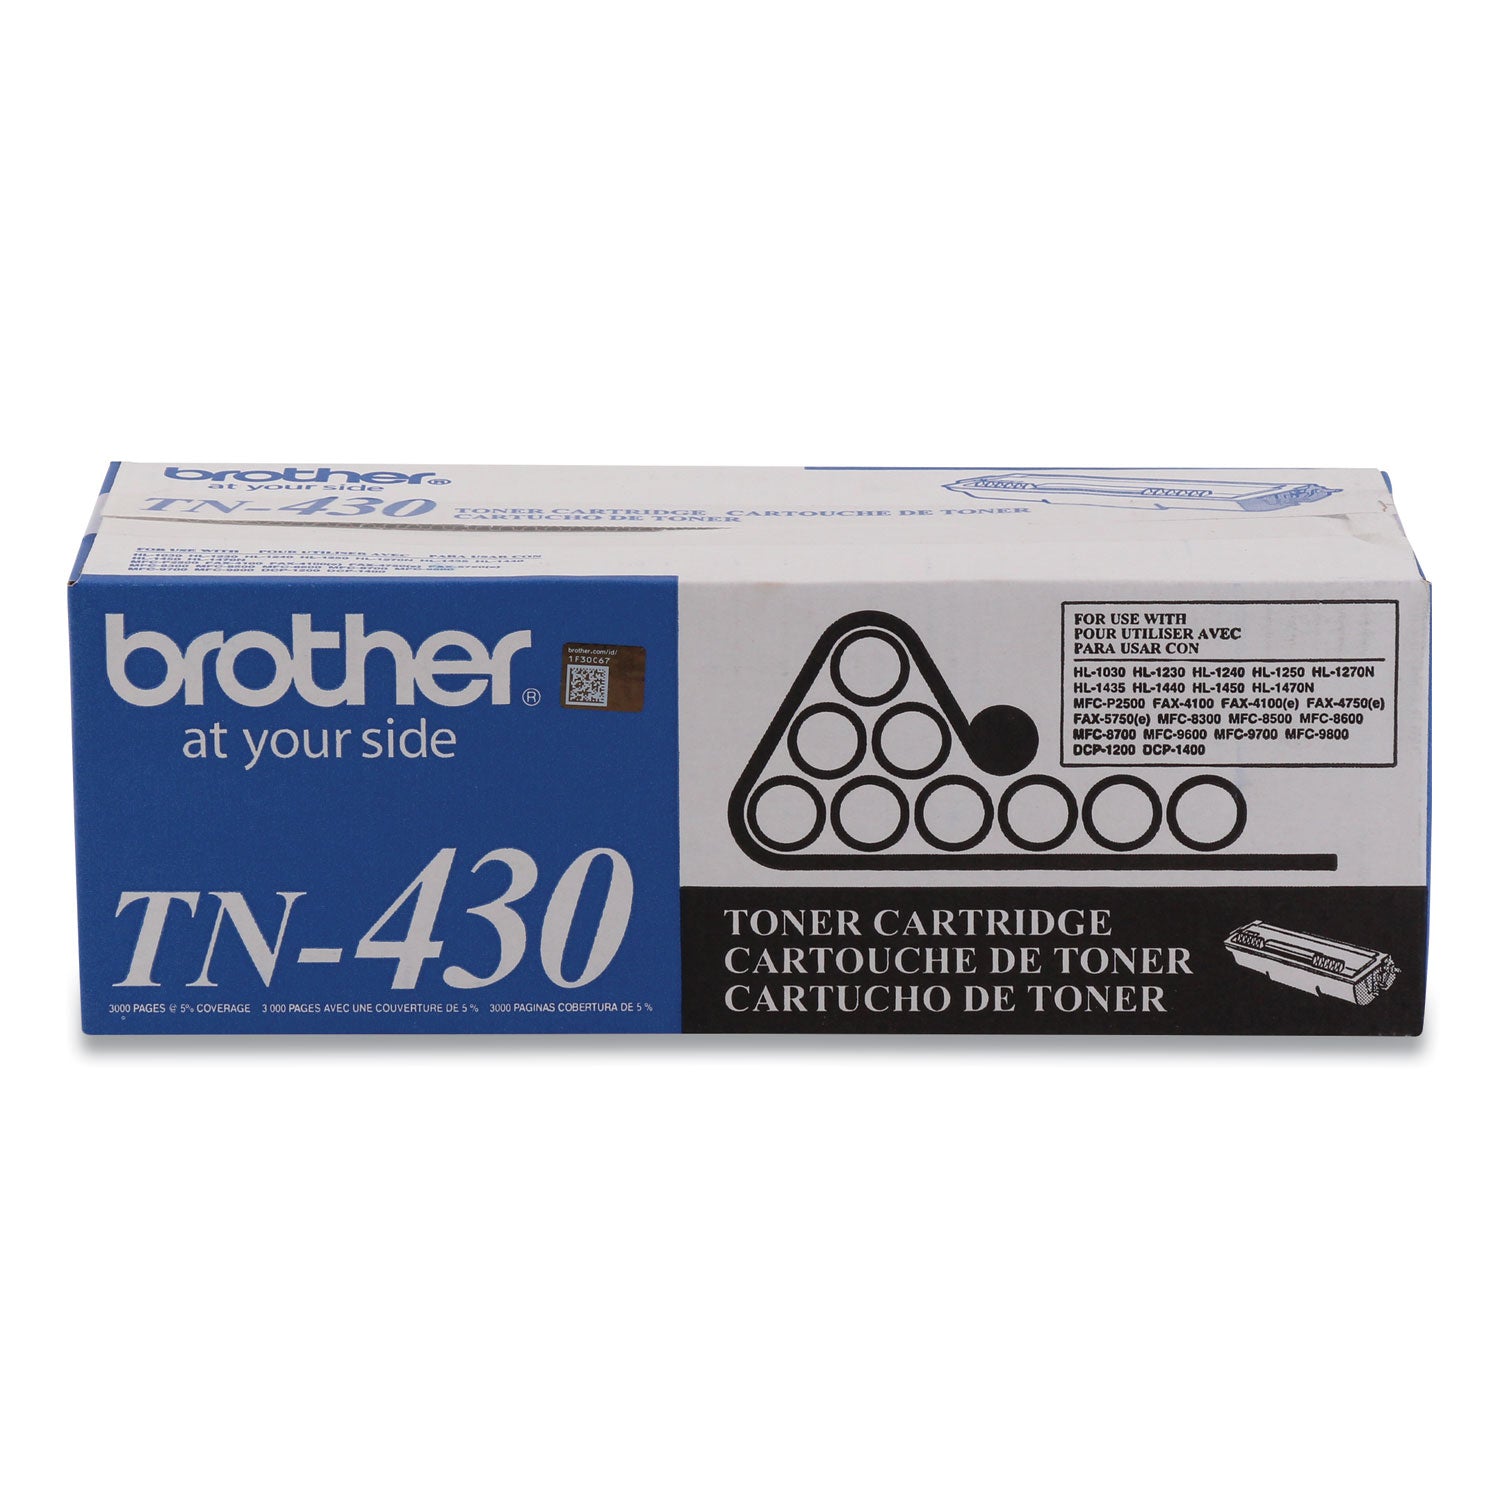 tn430-toner-3000-page-yield-black_brttn430 - 1